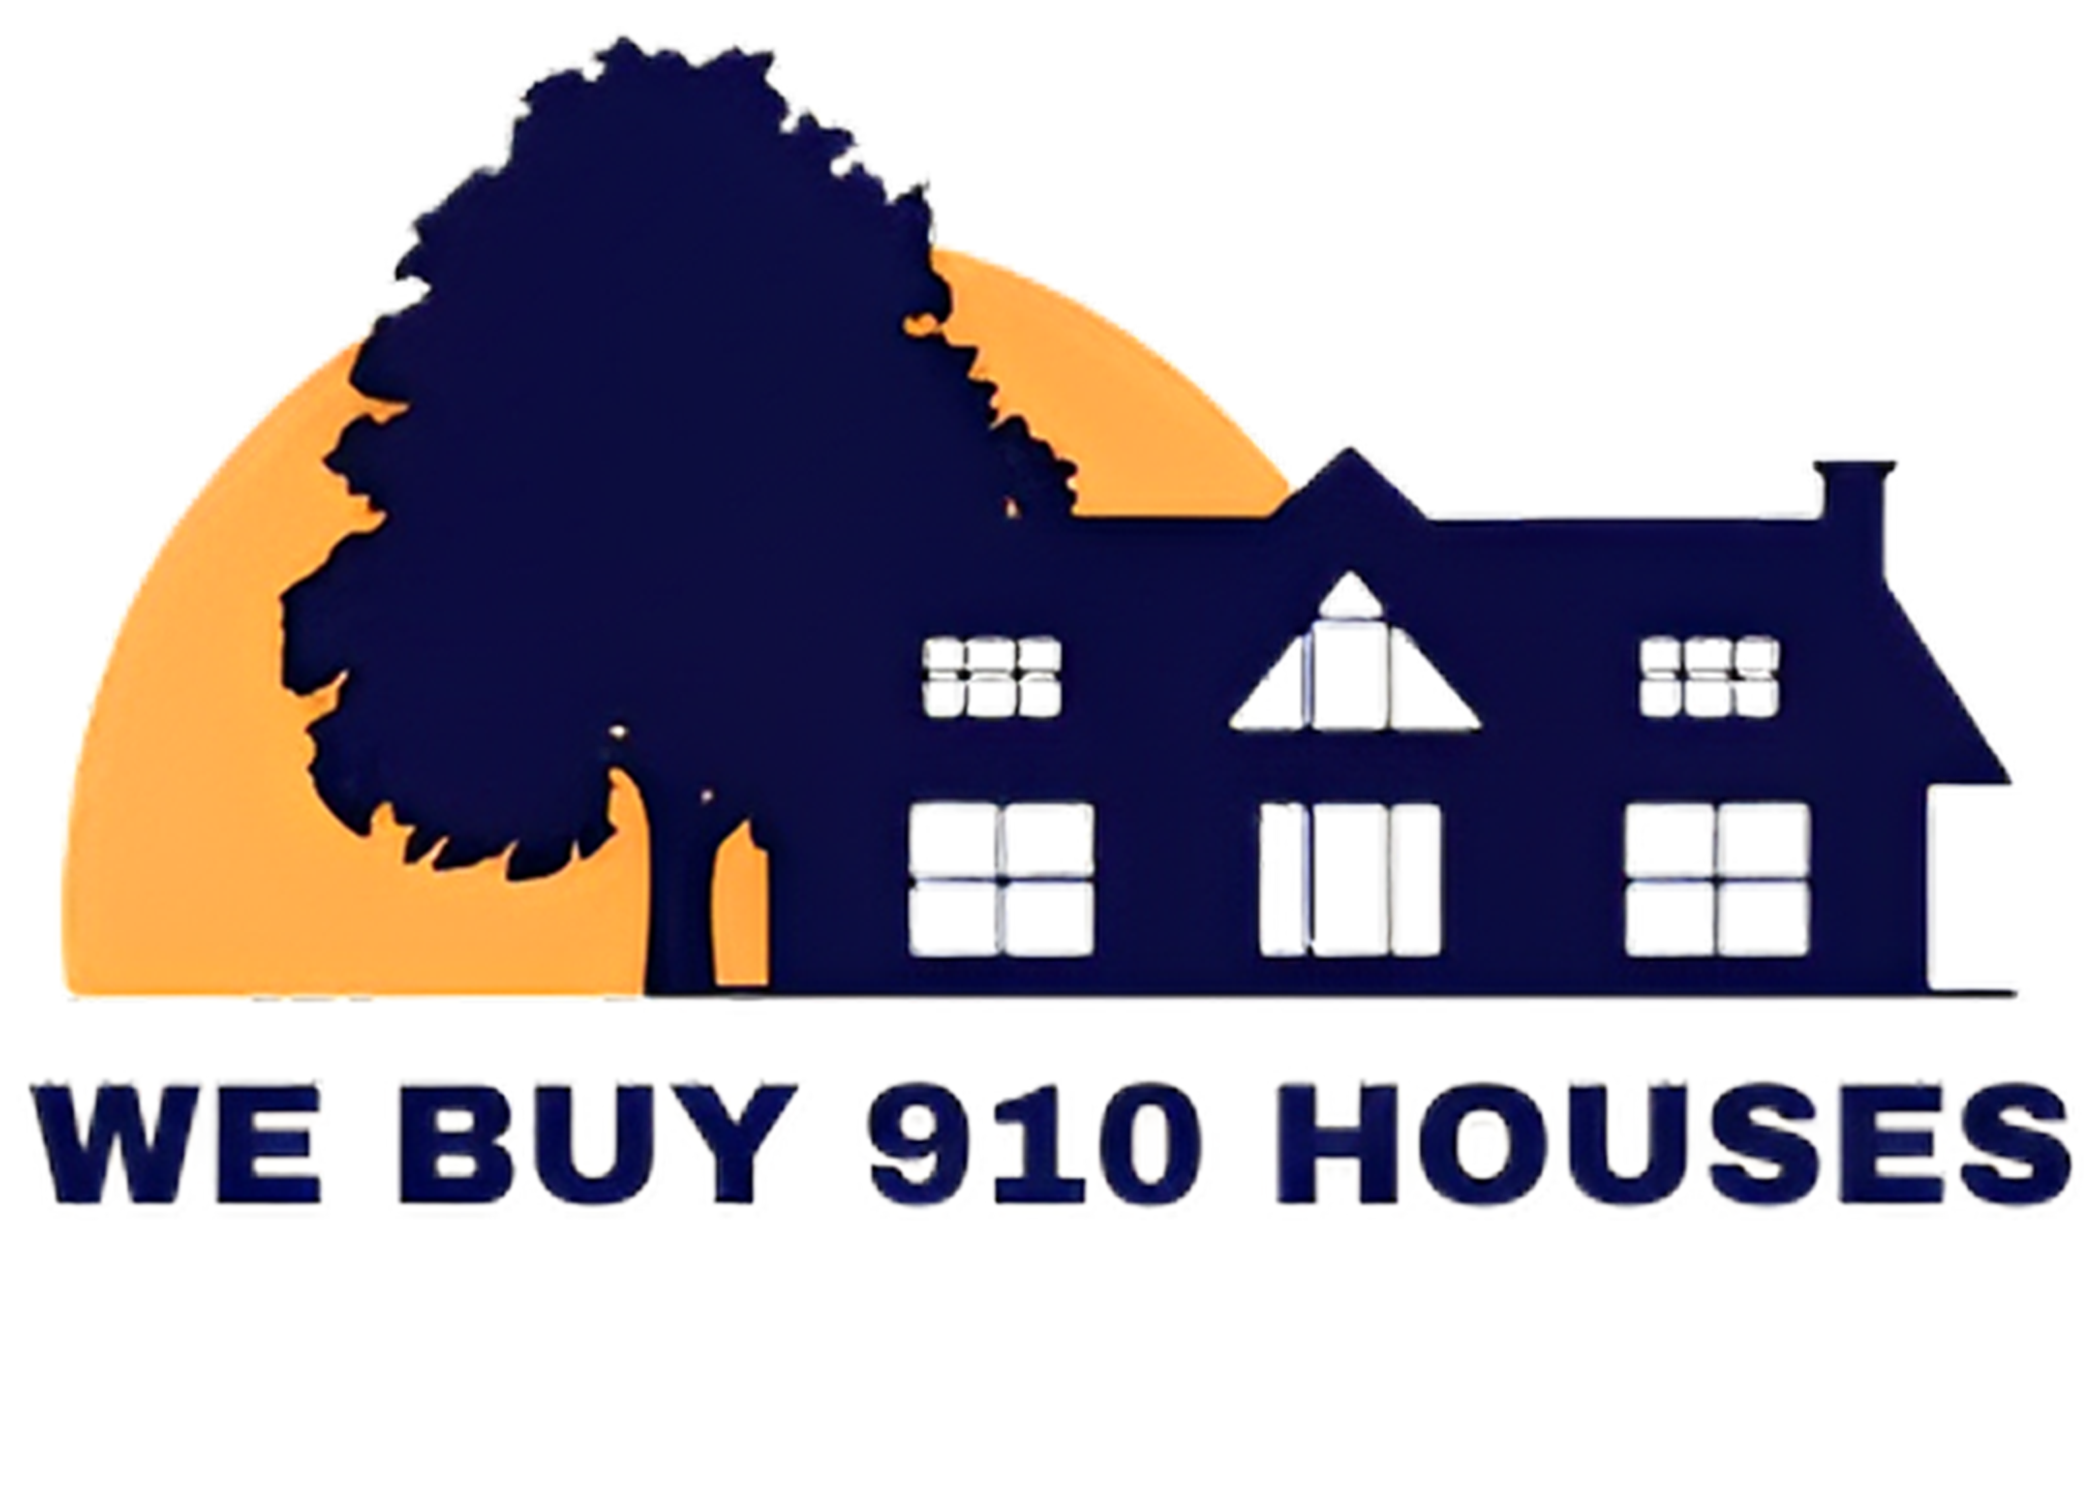 We Buy 910 Houses logo